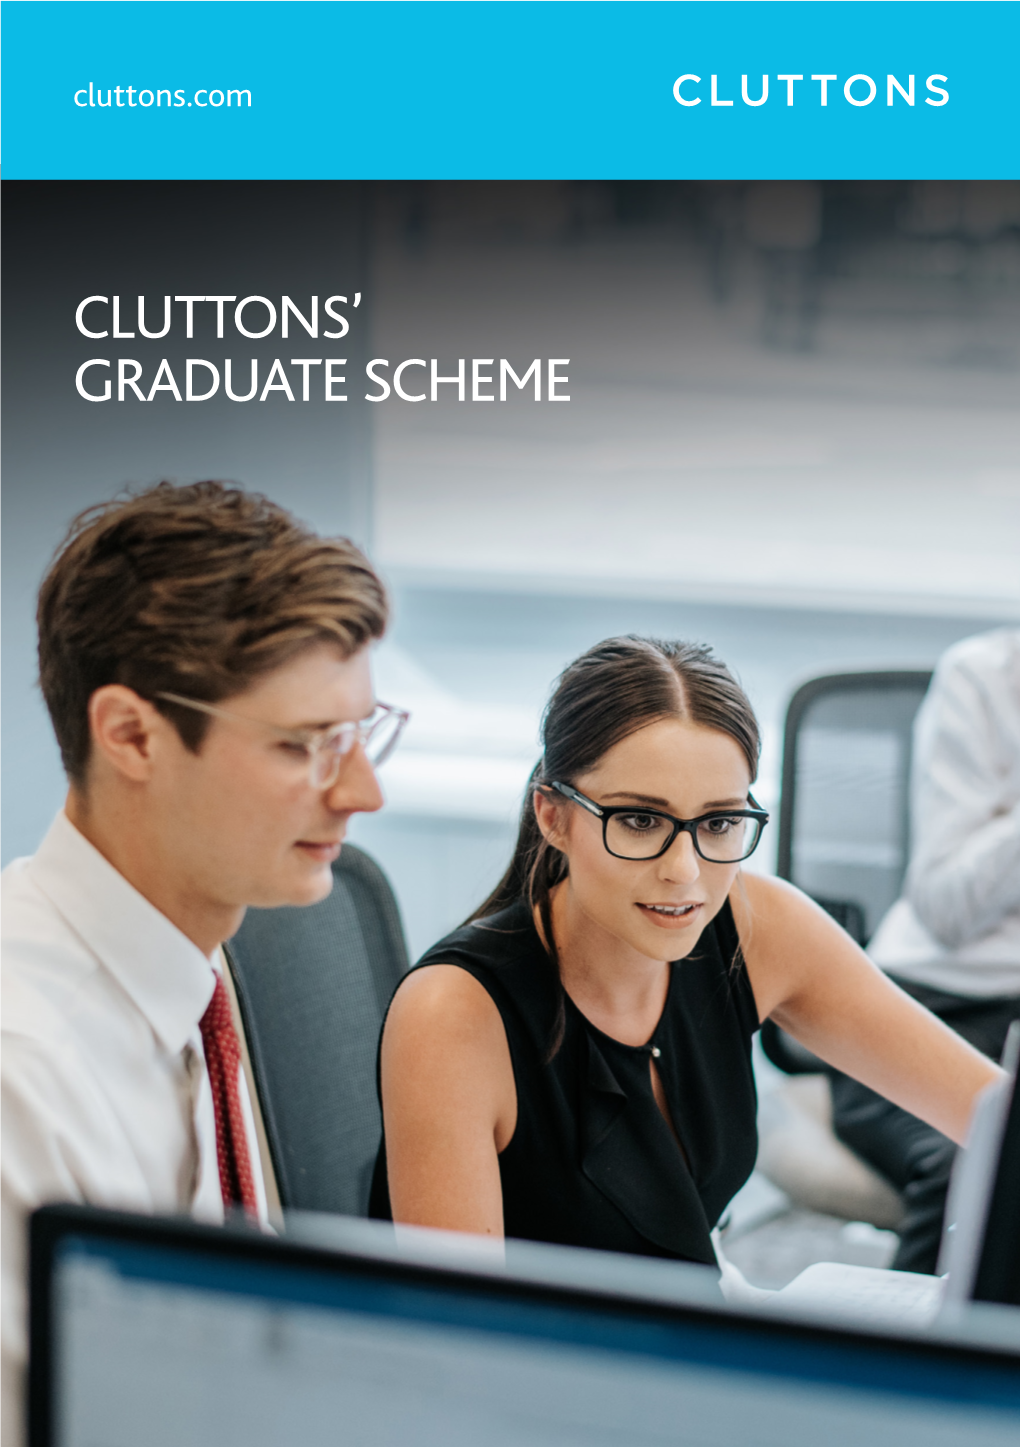 Cluttons' Graduate Scheme